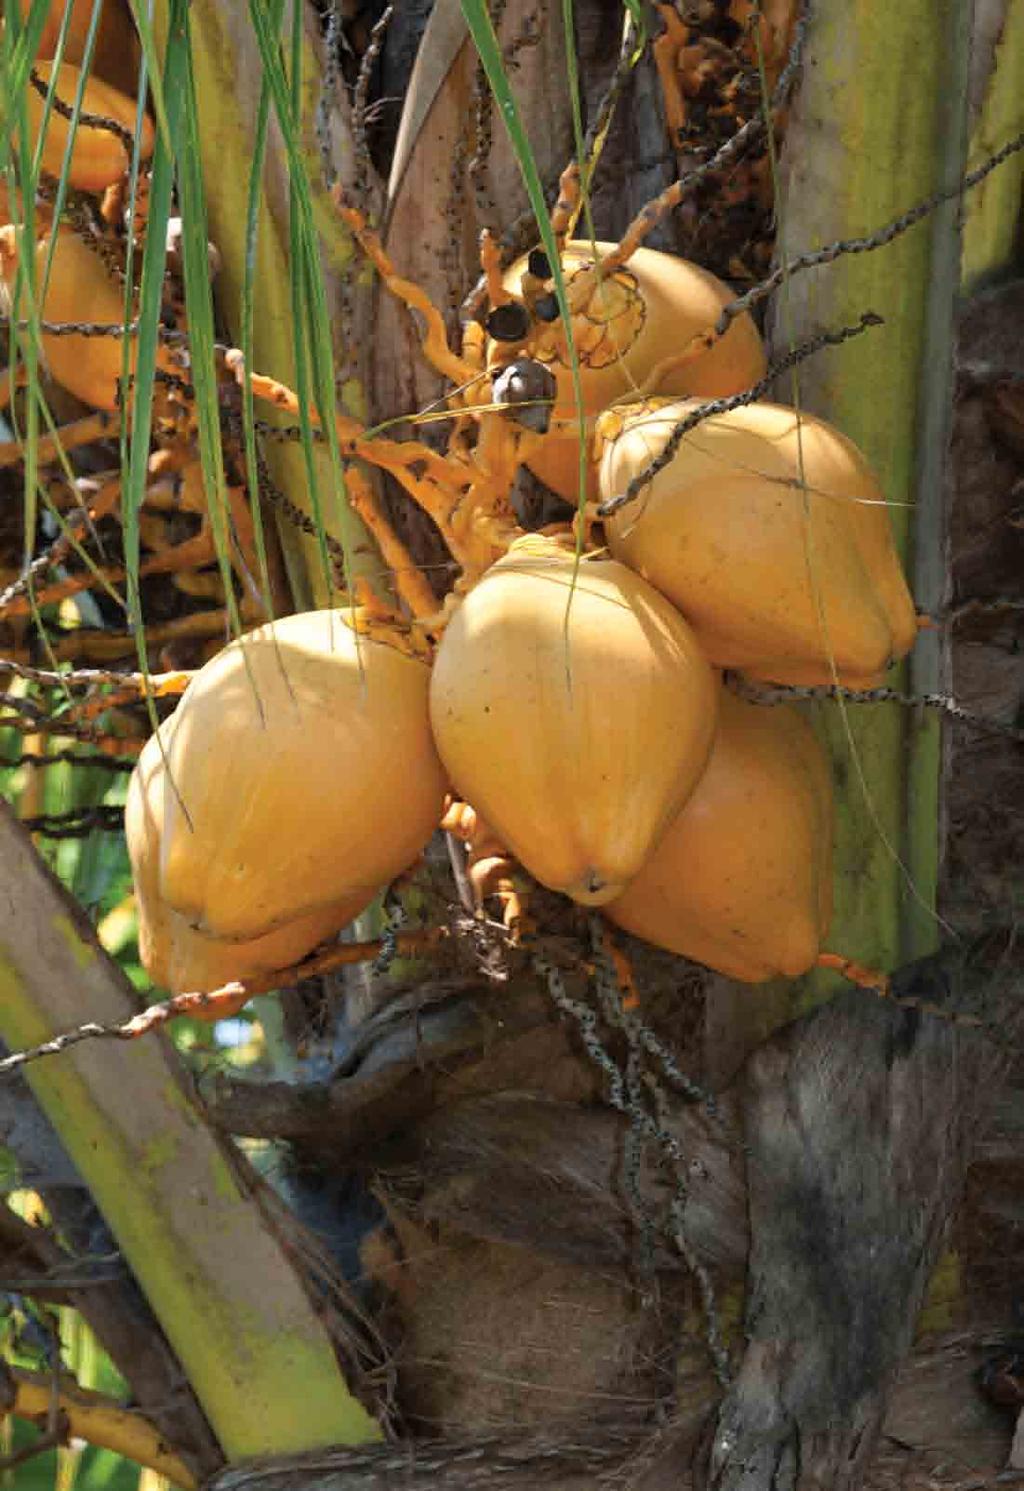 Palm trees with edible parts Capuca, Calyptrogyne ghiesbreghtiana (Chízmar 2009:87-88) Chamaedorea pinnatifrons (Chízmar